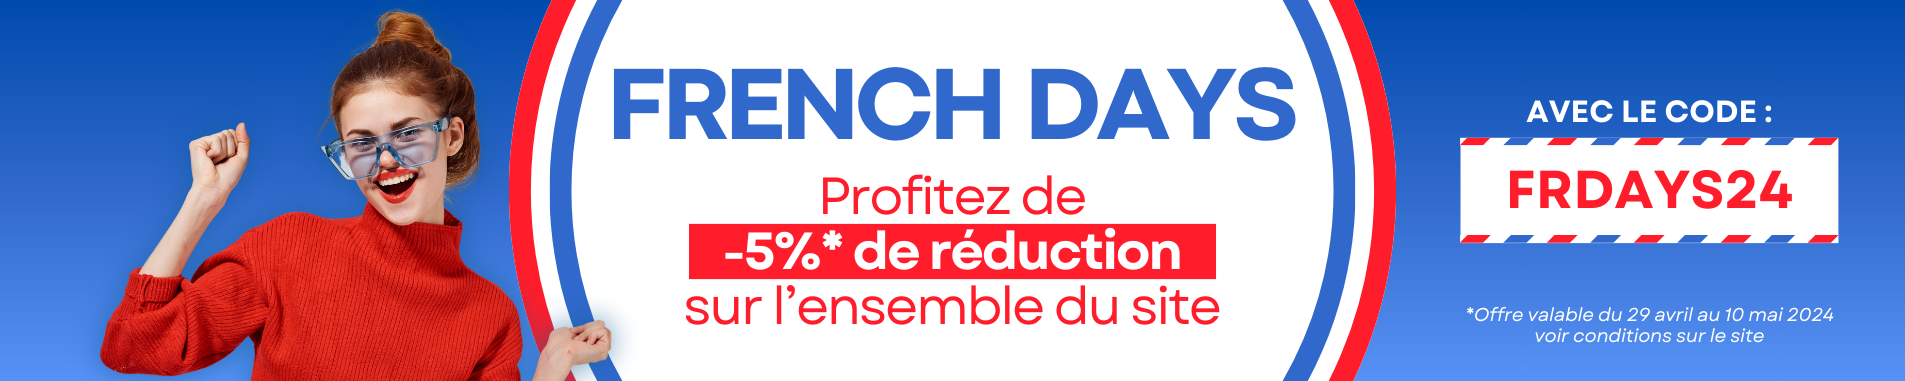 French days 2024_UNI-Presse